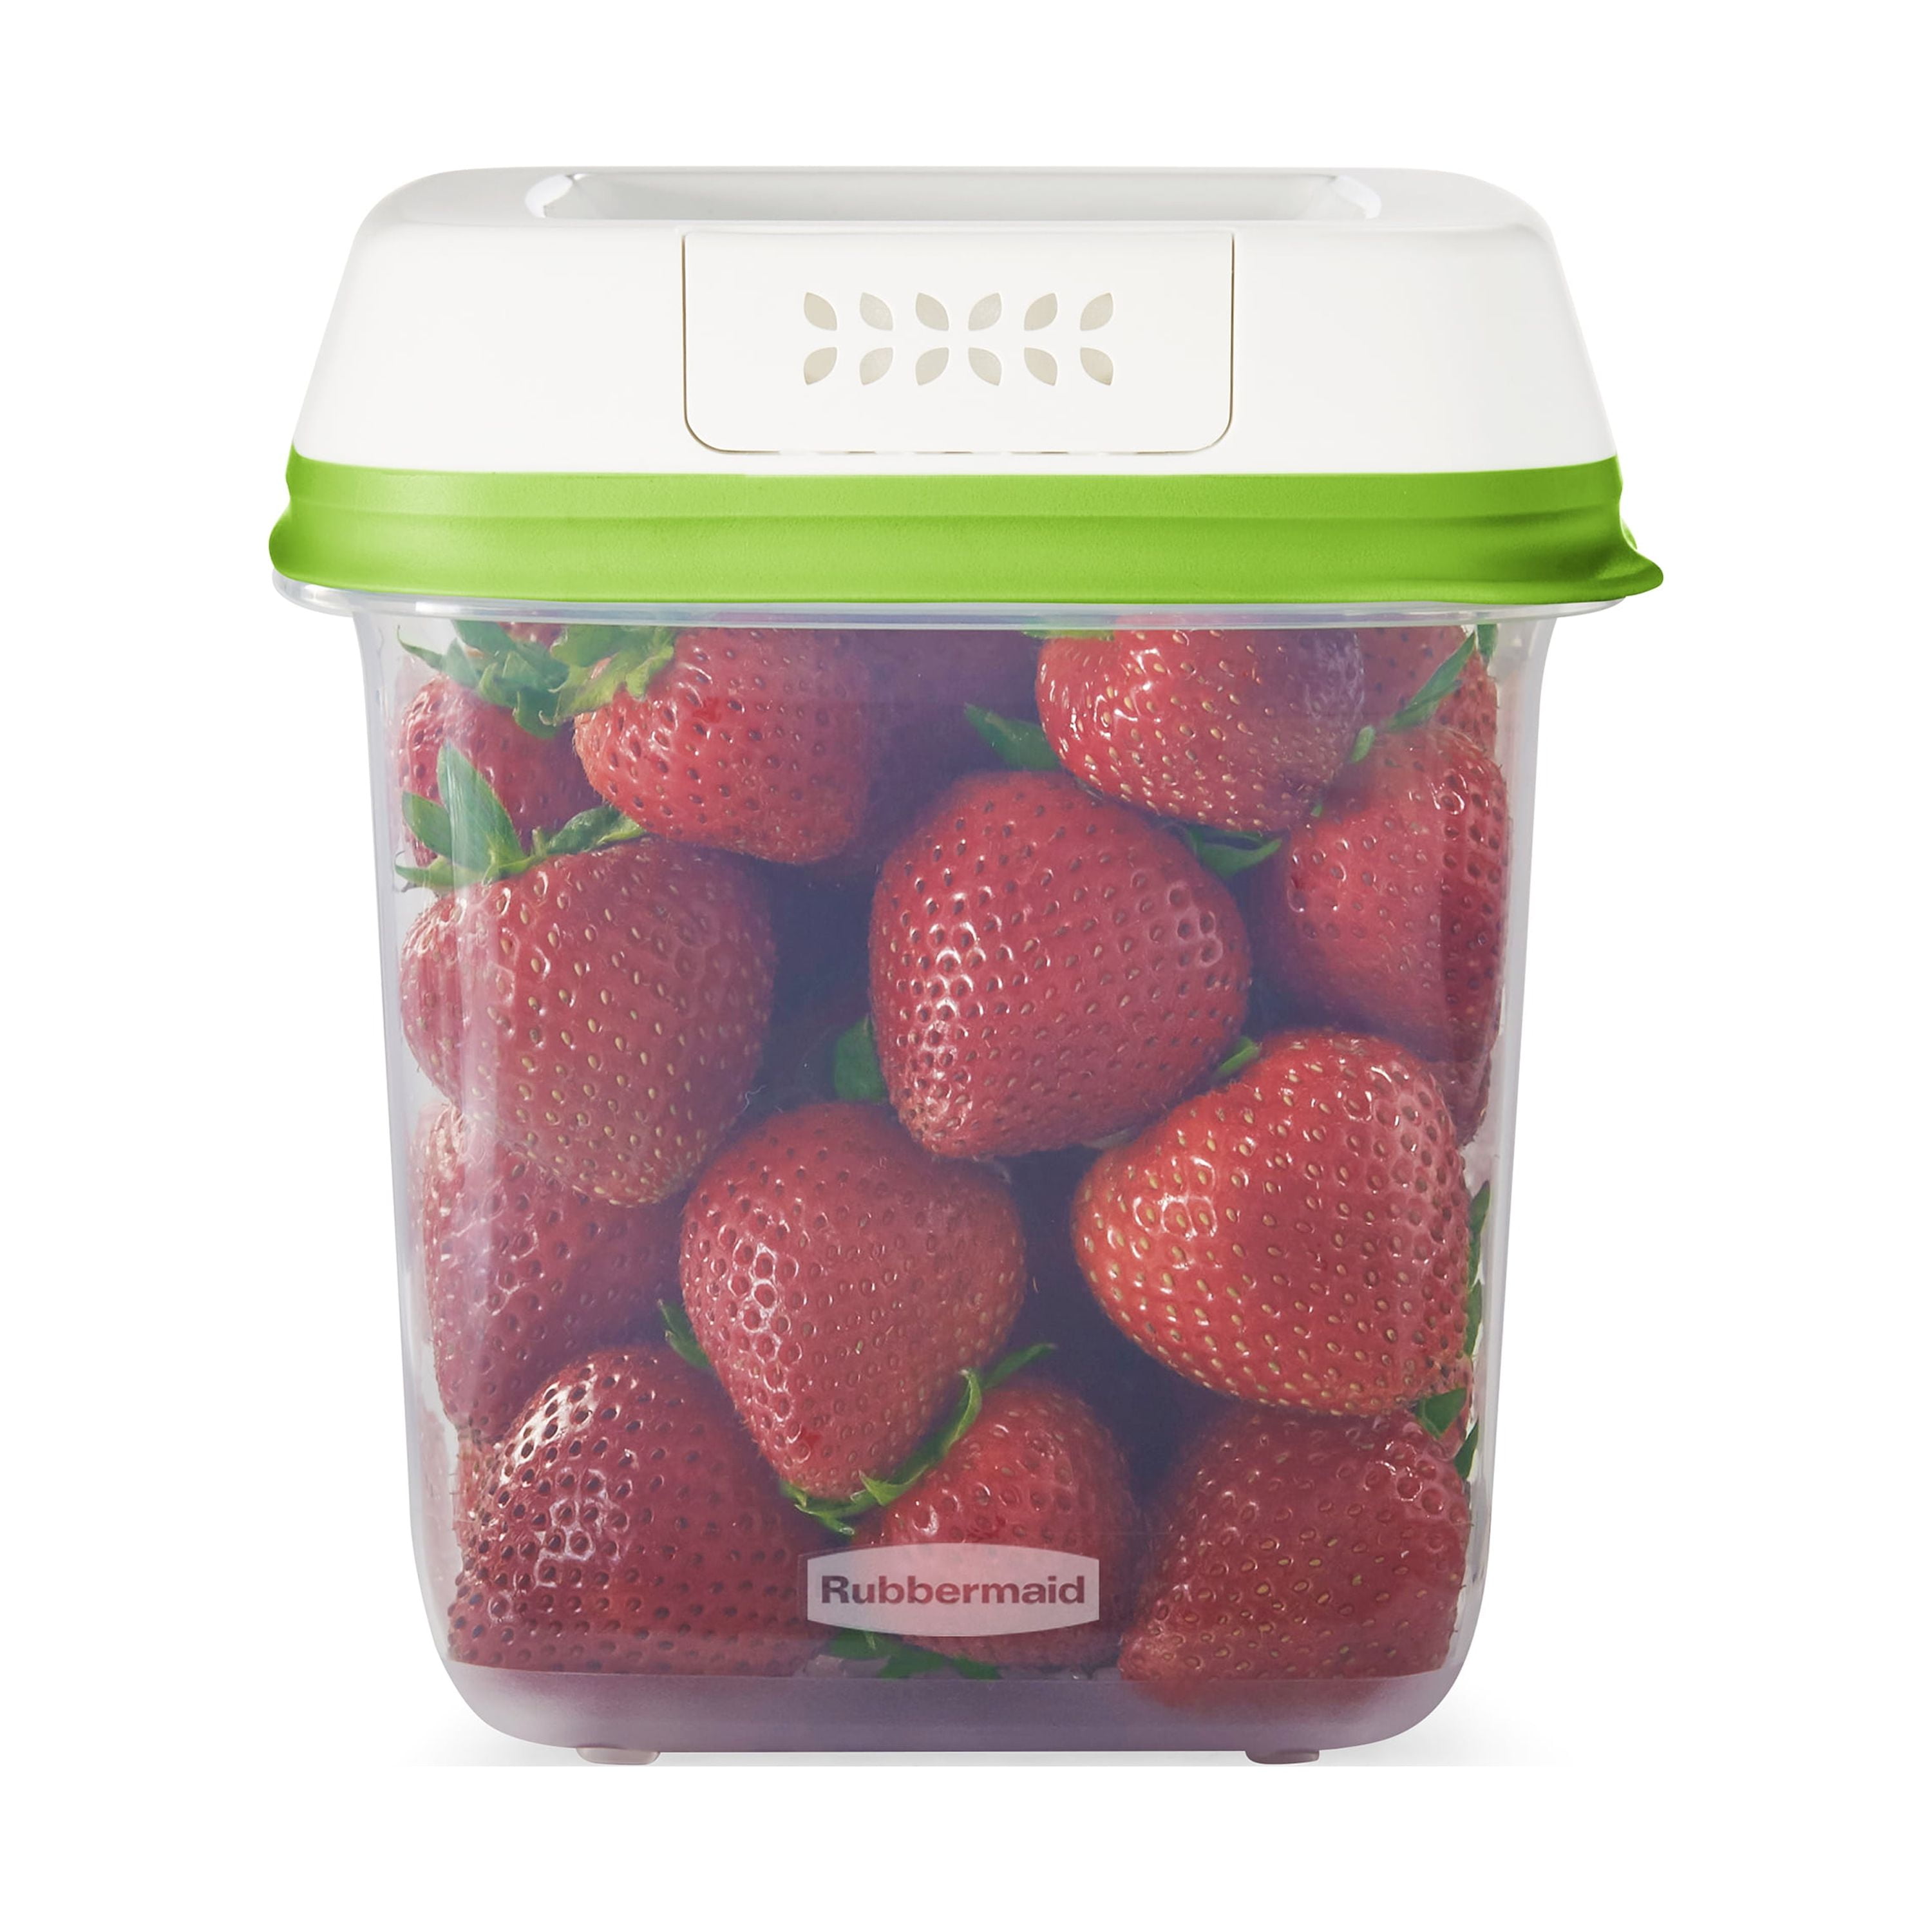 FreshWorks® Produce Saver, Large Produce Storage Container